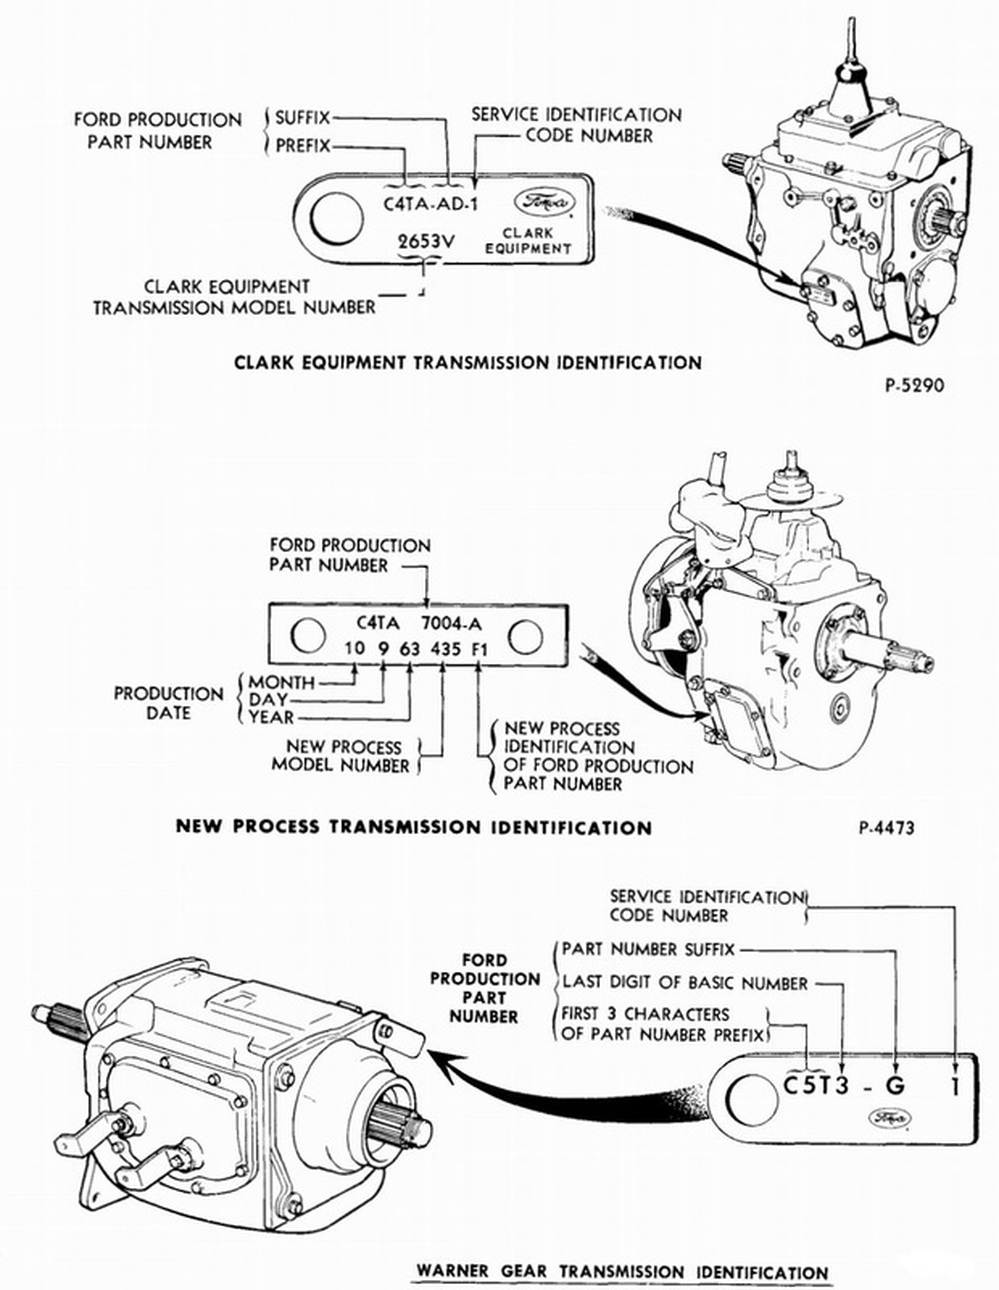 Manual Transmission Applications - Gary's Garagemahal (the Bullnose bible)